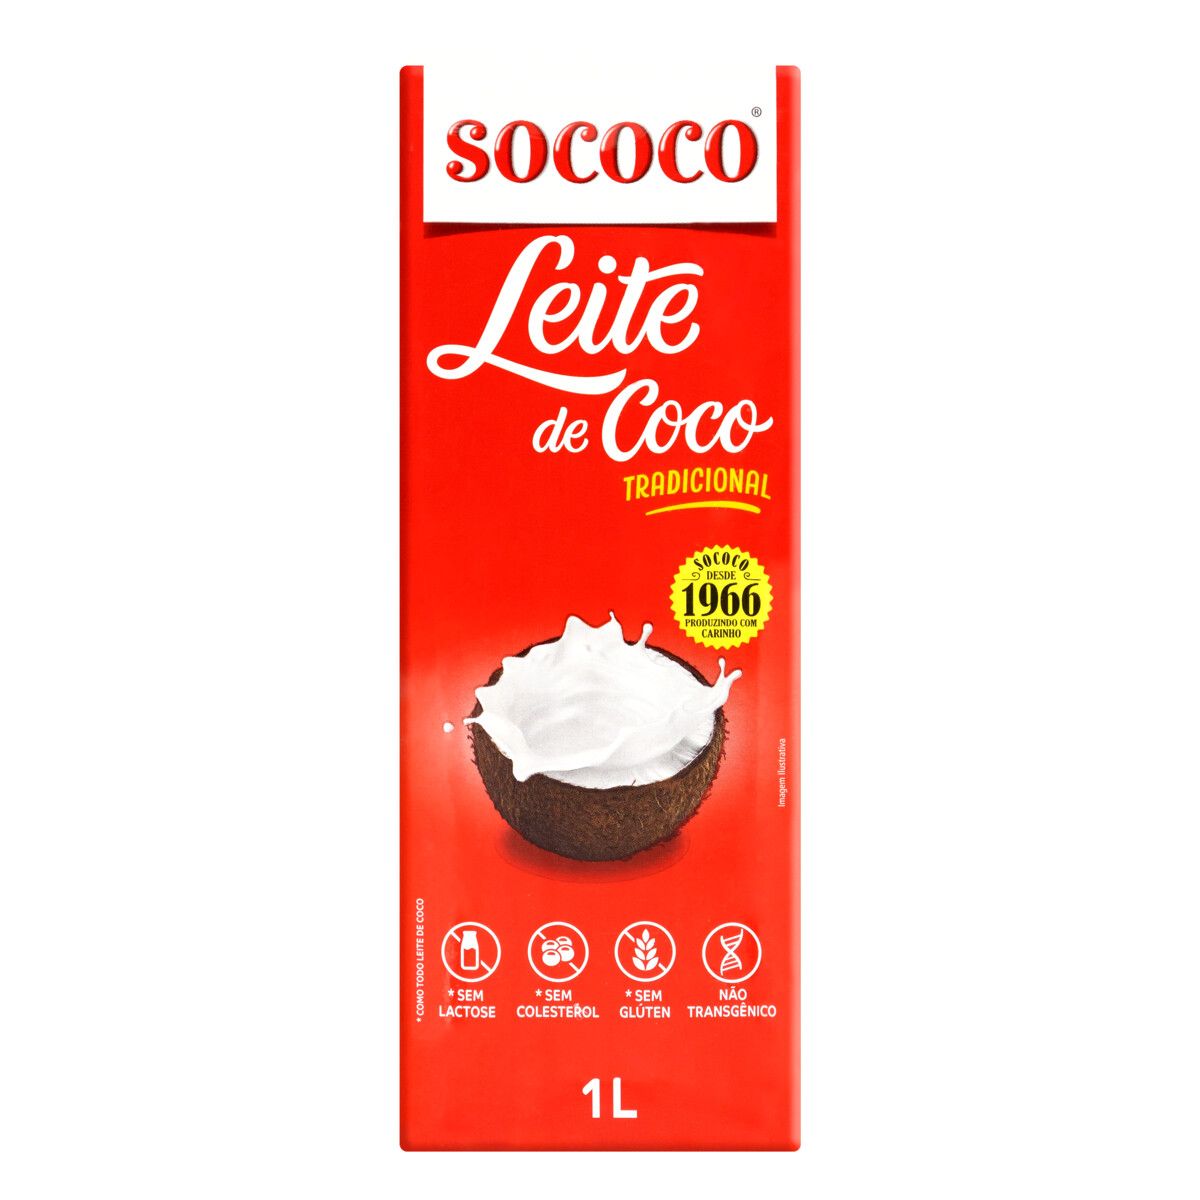 Leite de Coco Tradicional Sococo Caixa 1l image number 0